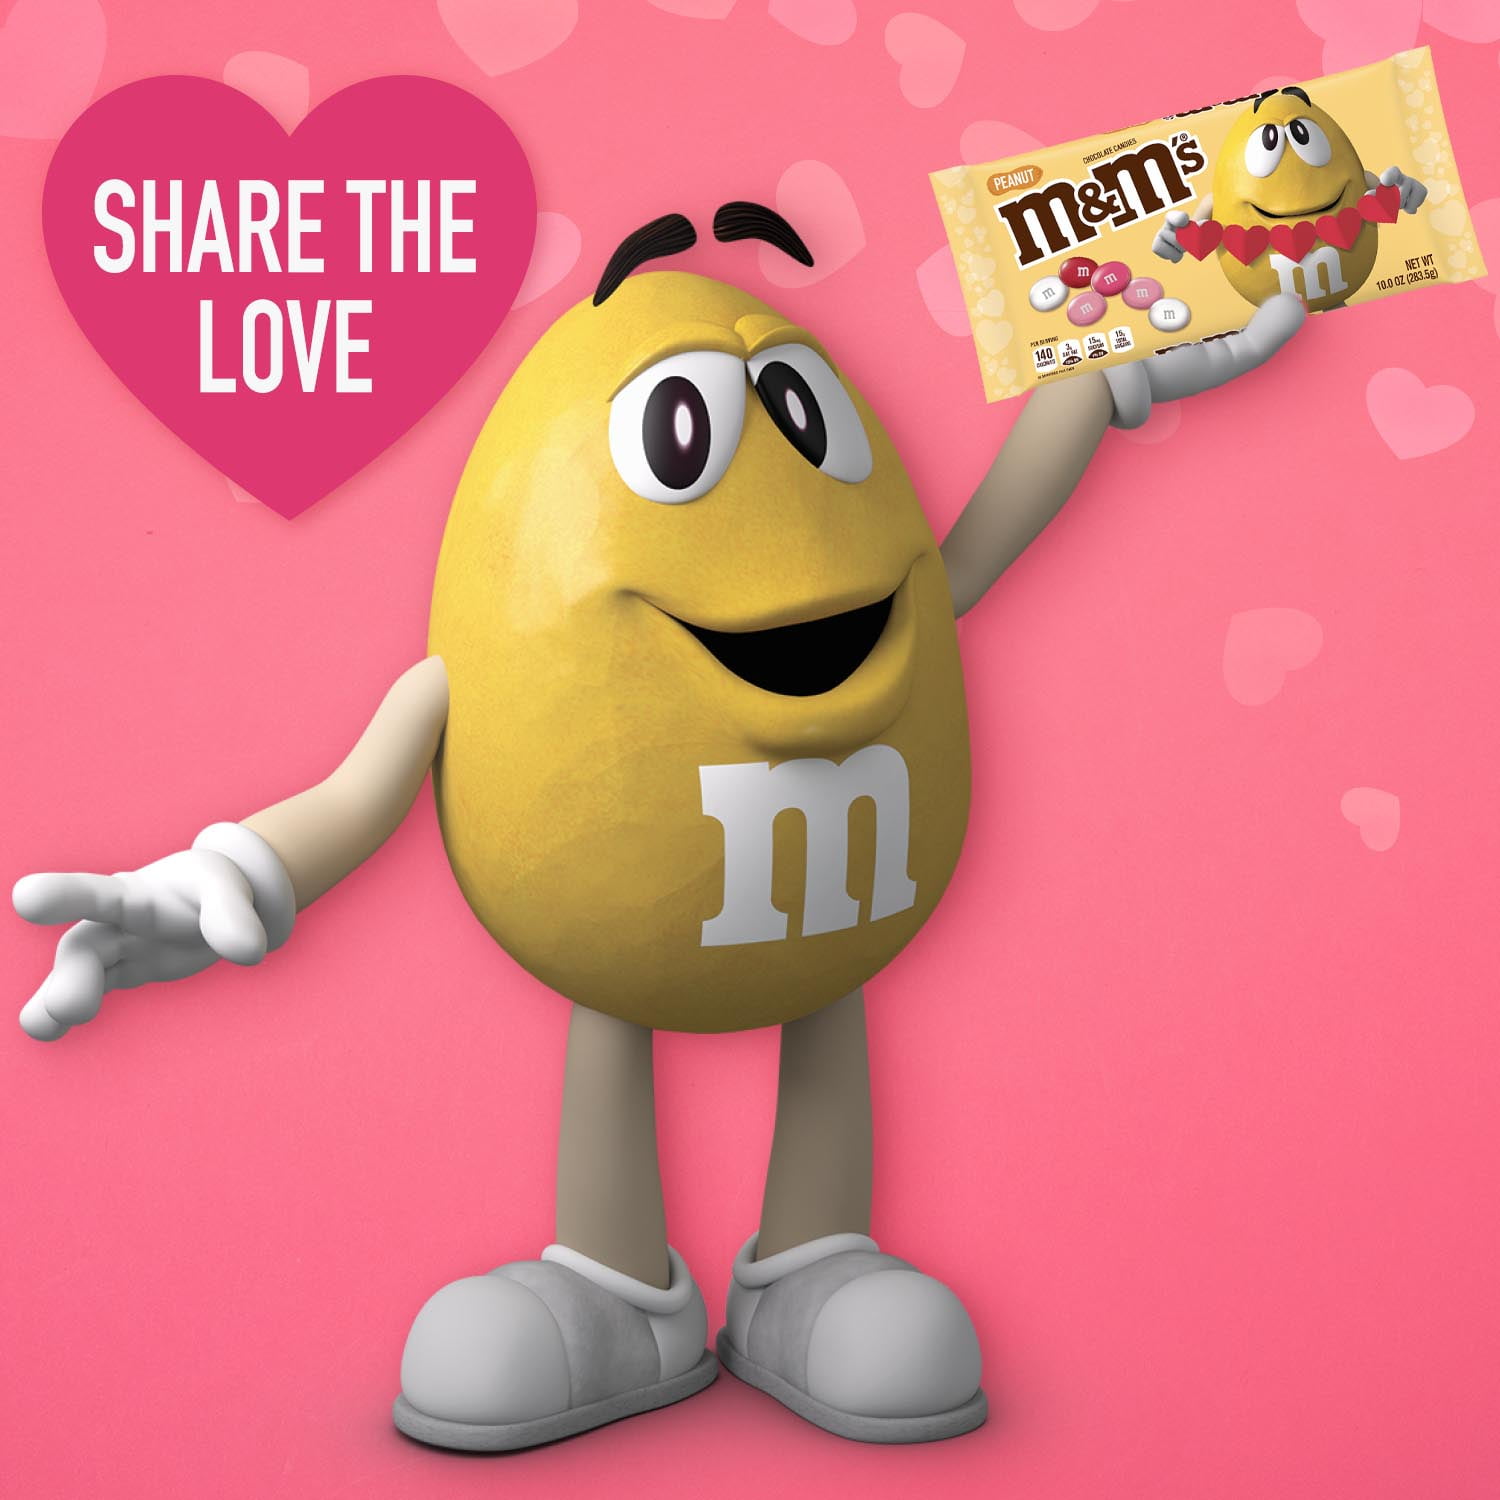 M&M'S Peanut Butter Chocolate Valentine Candy 9.48 oz. 